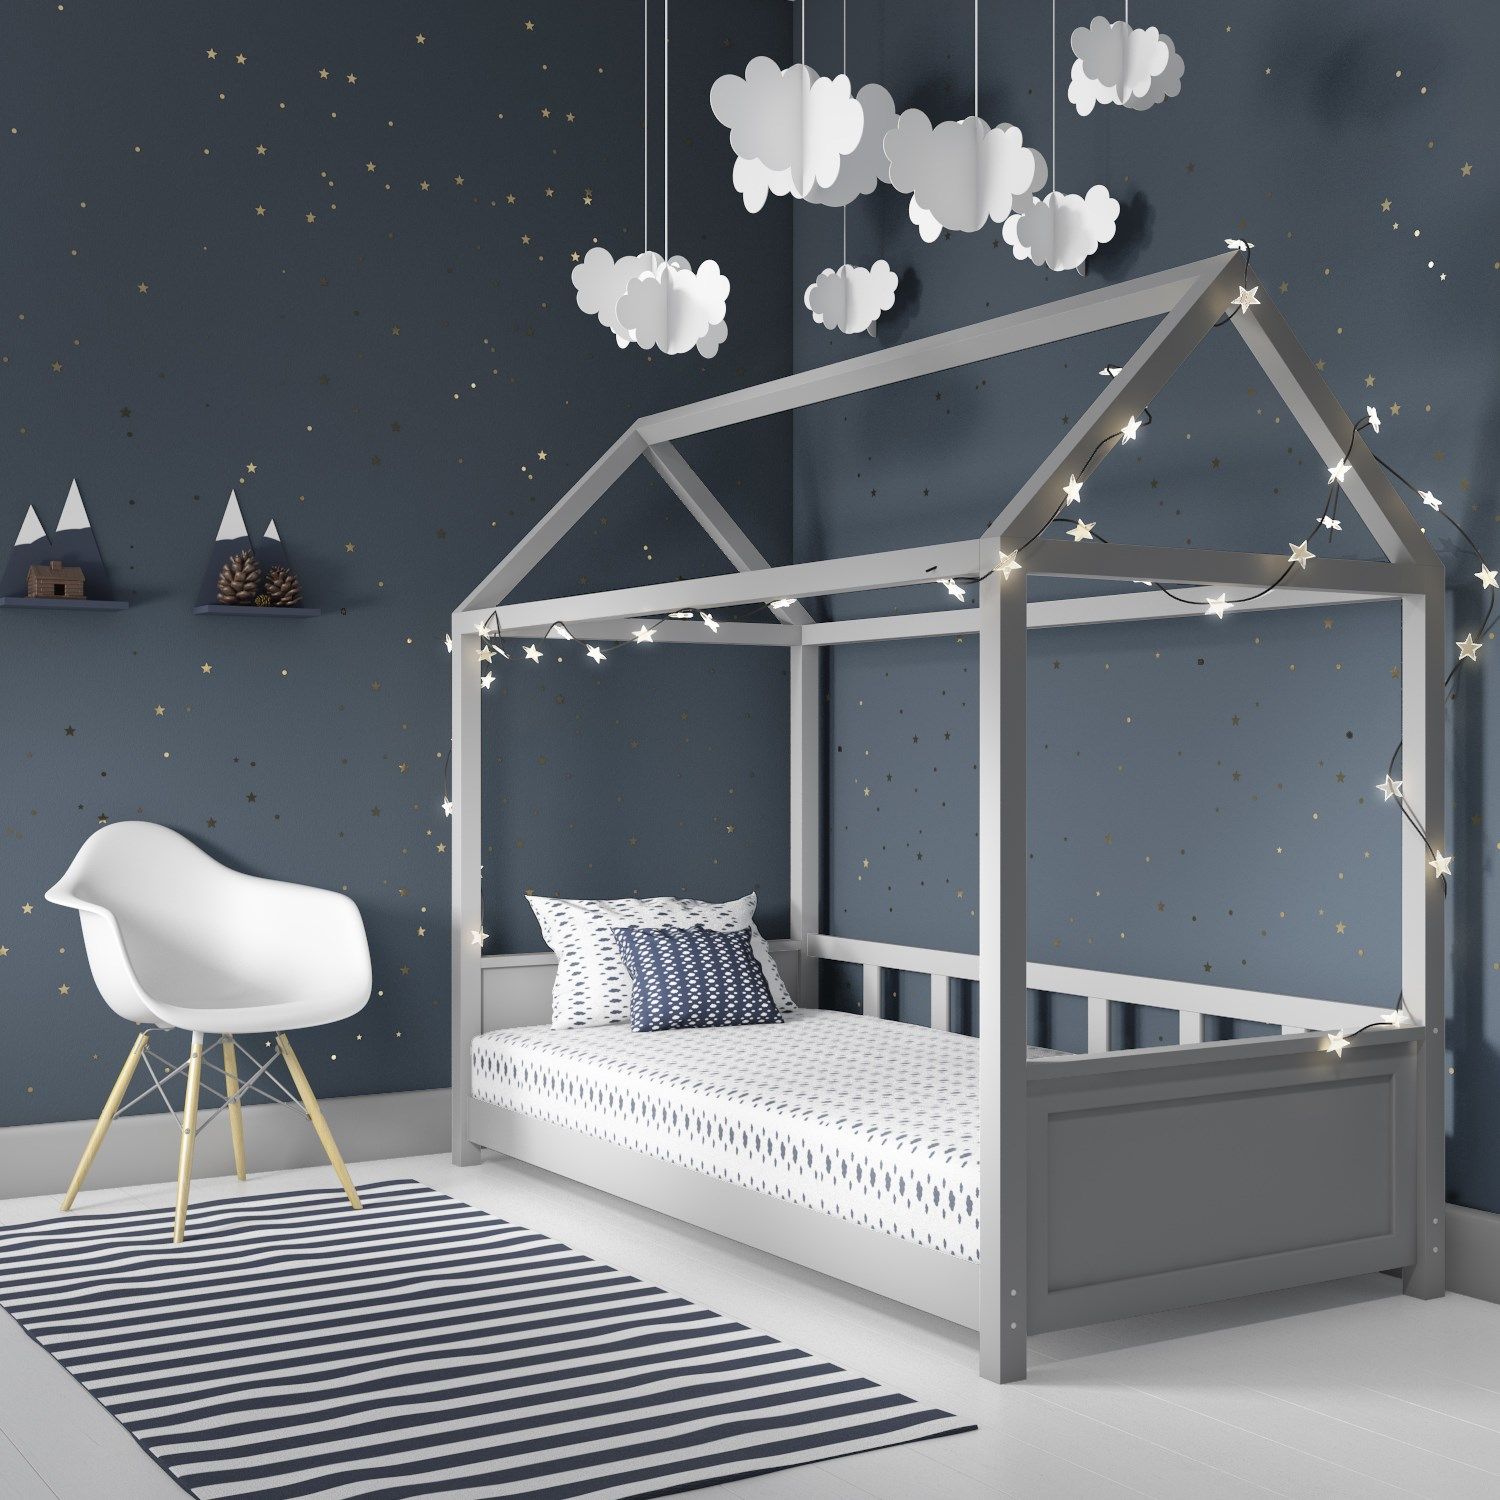 12 gorgeous grey bedroom design ideas